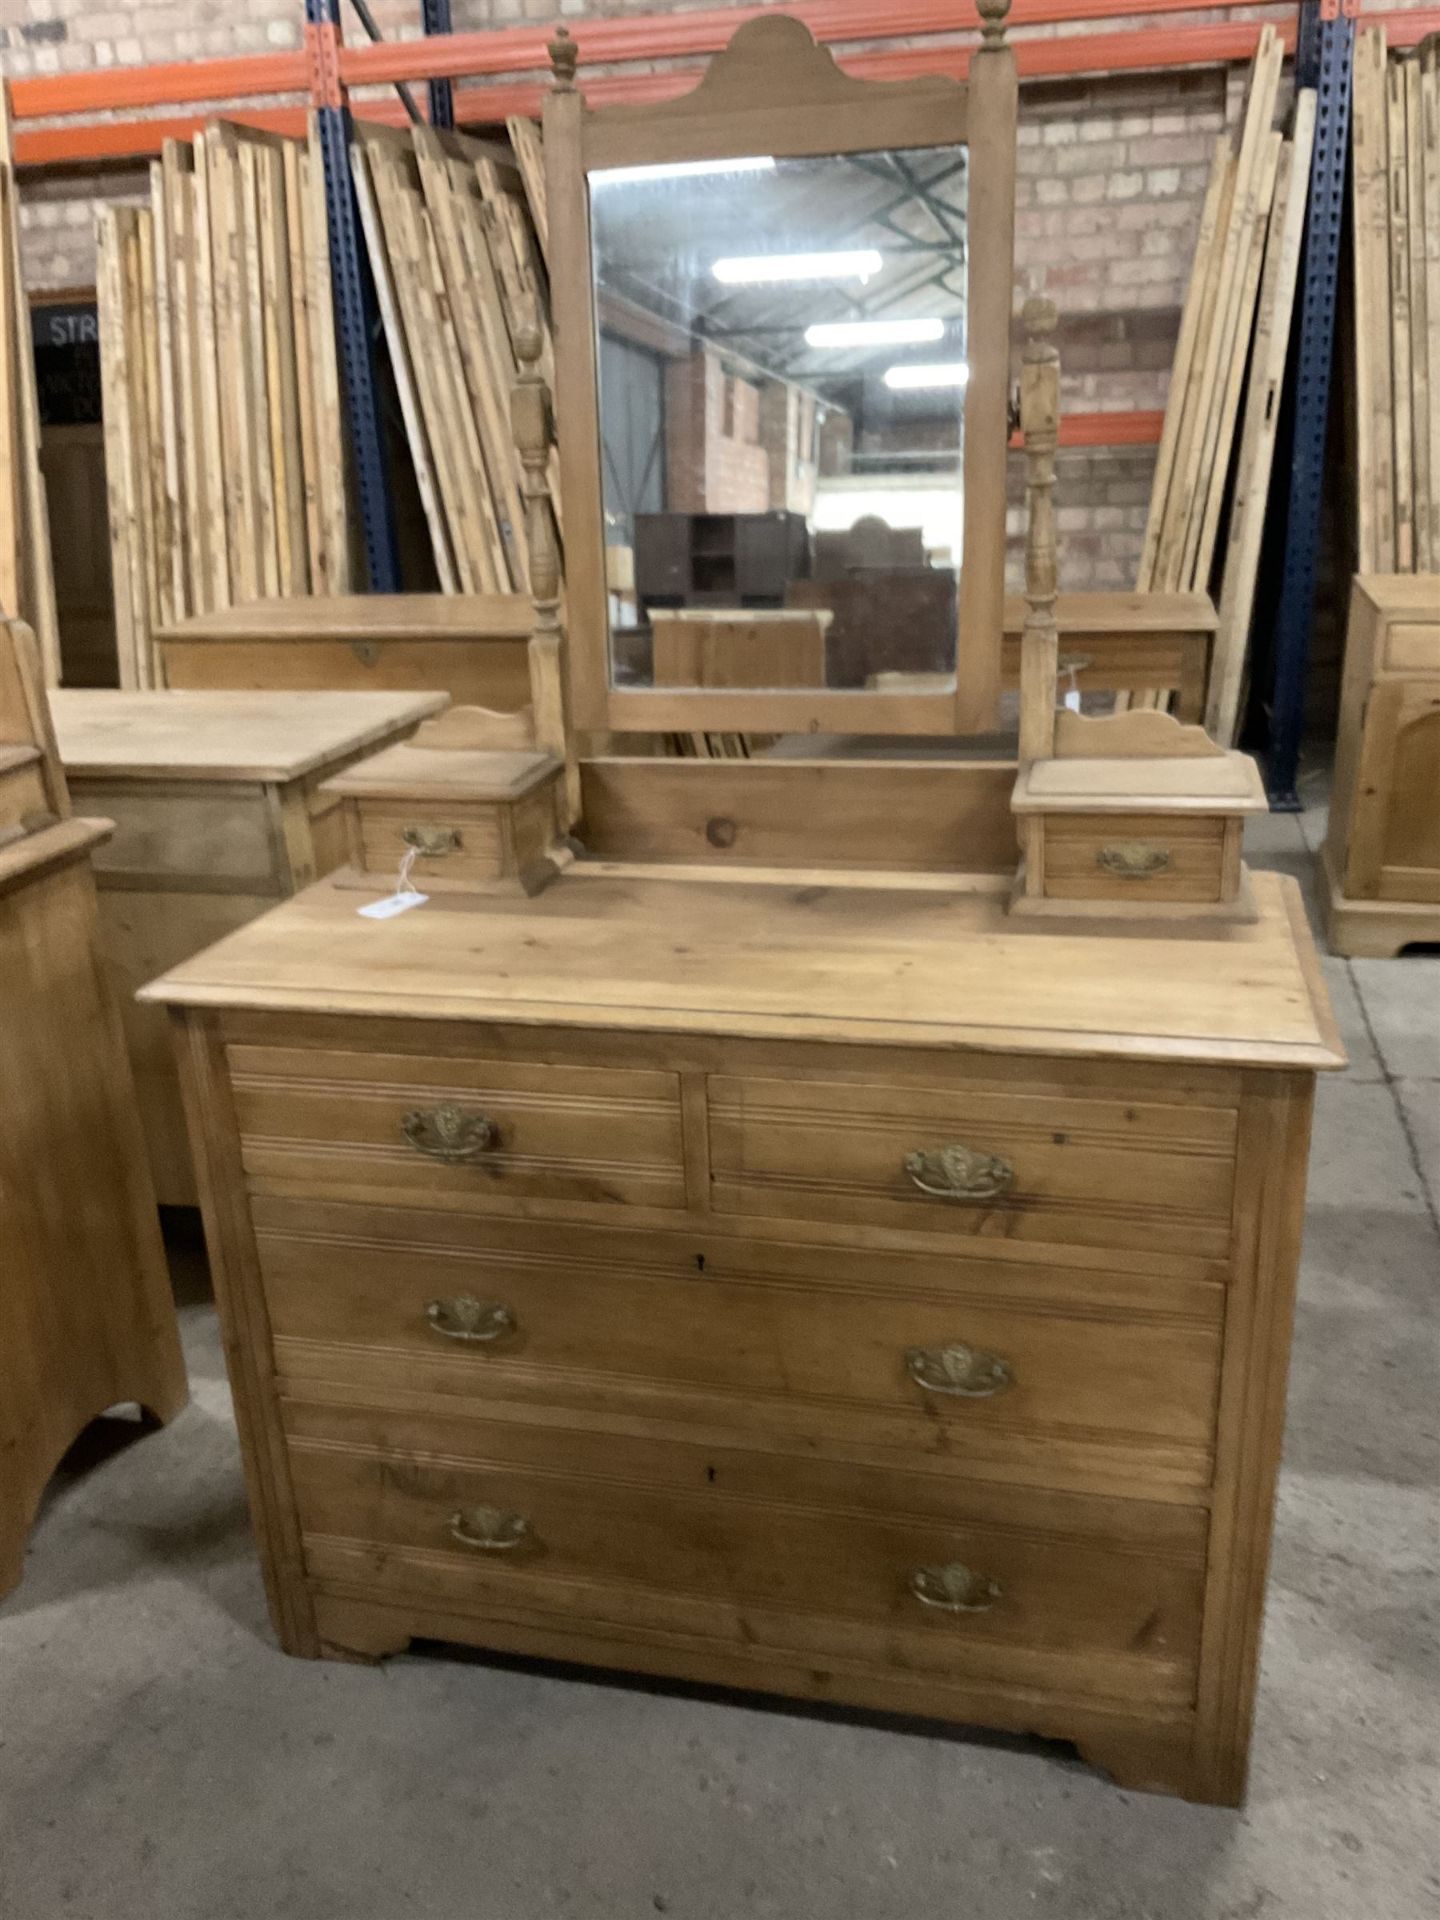 Edwardian pine dressing chest